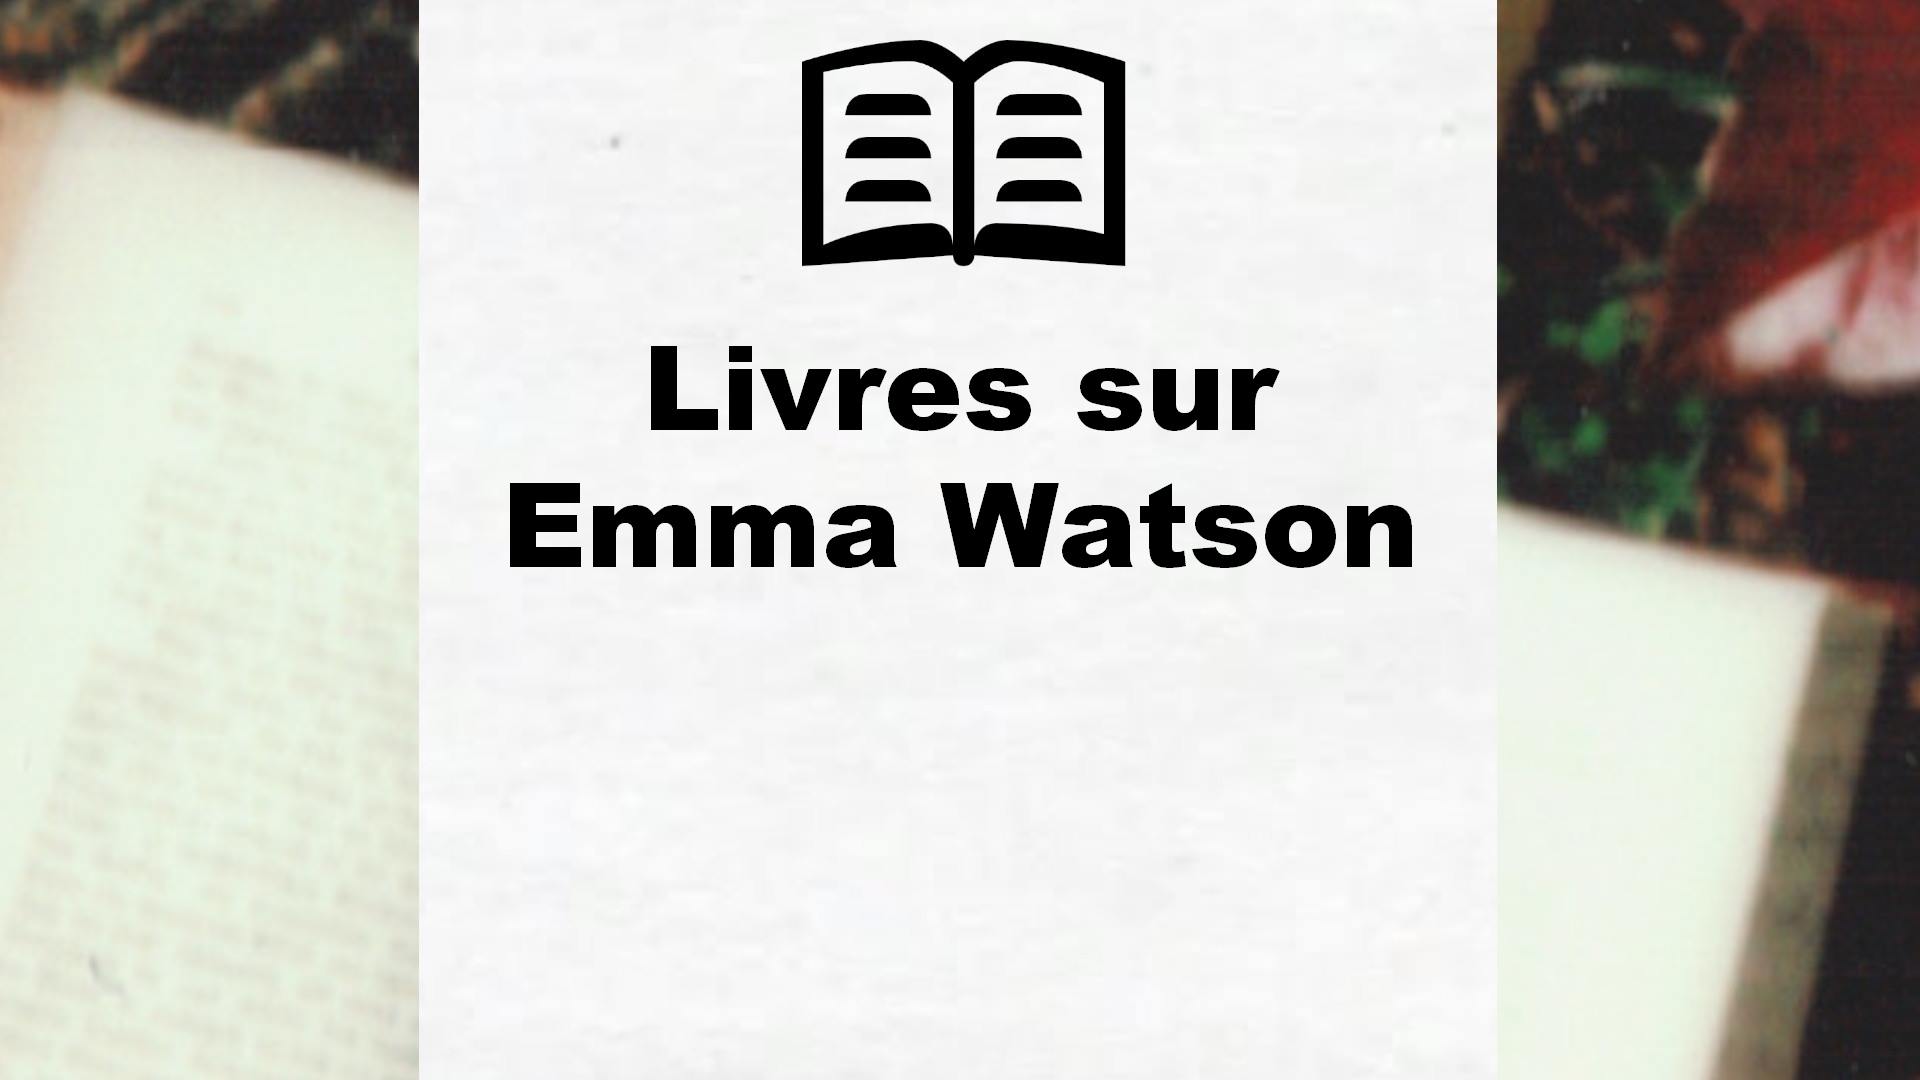 Livres sur Emma Watson